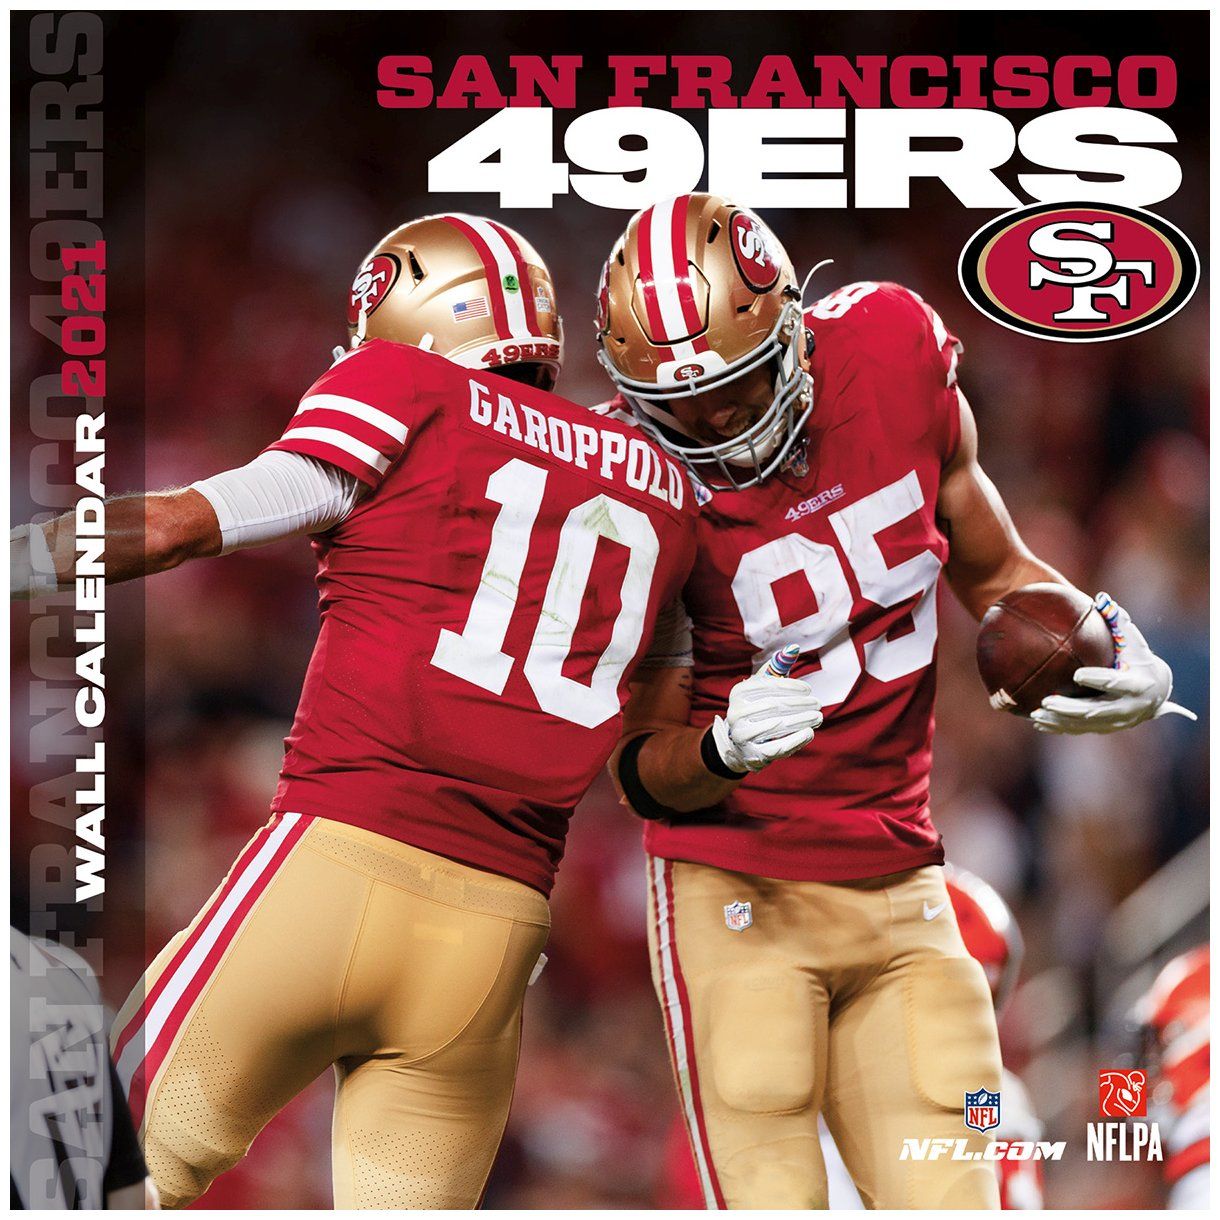 amfoo - Turner NFL 30x30cm Wand-Kalender 2021 San Francisco 49ers